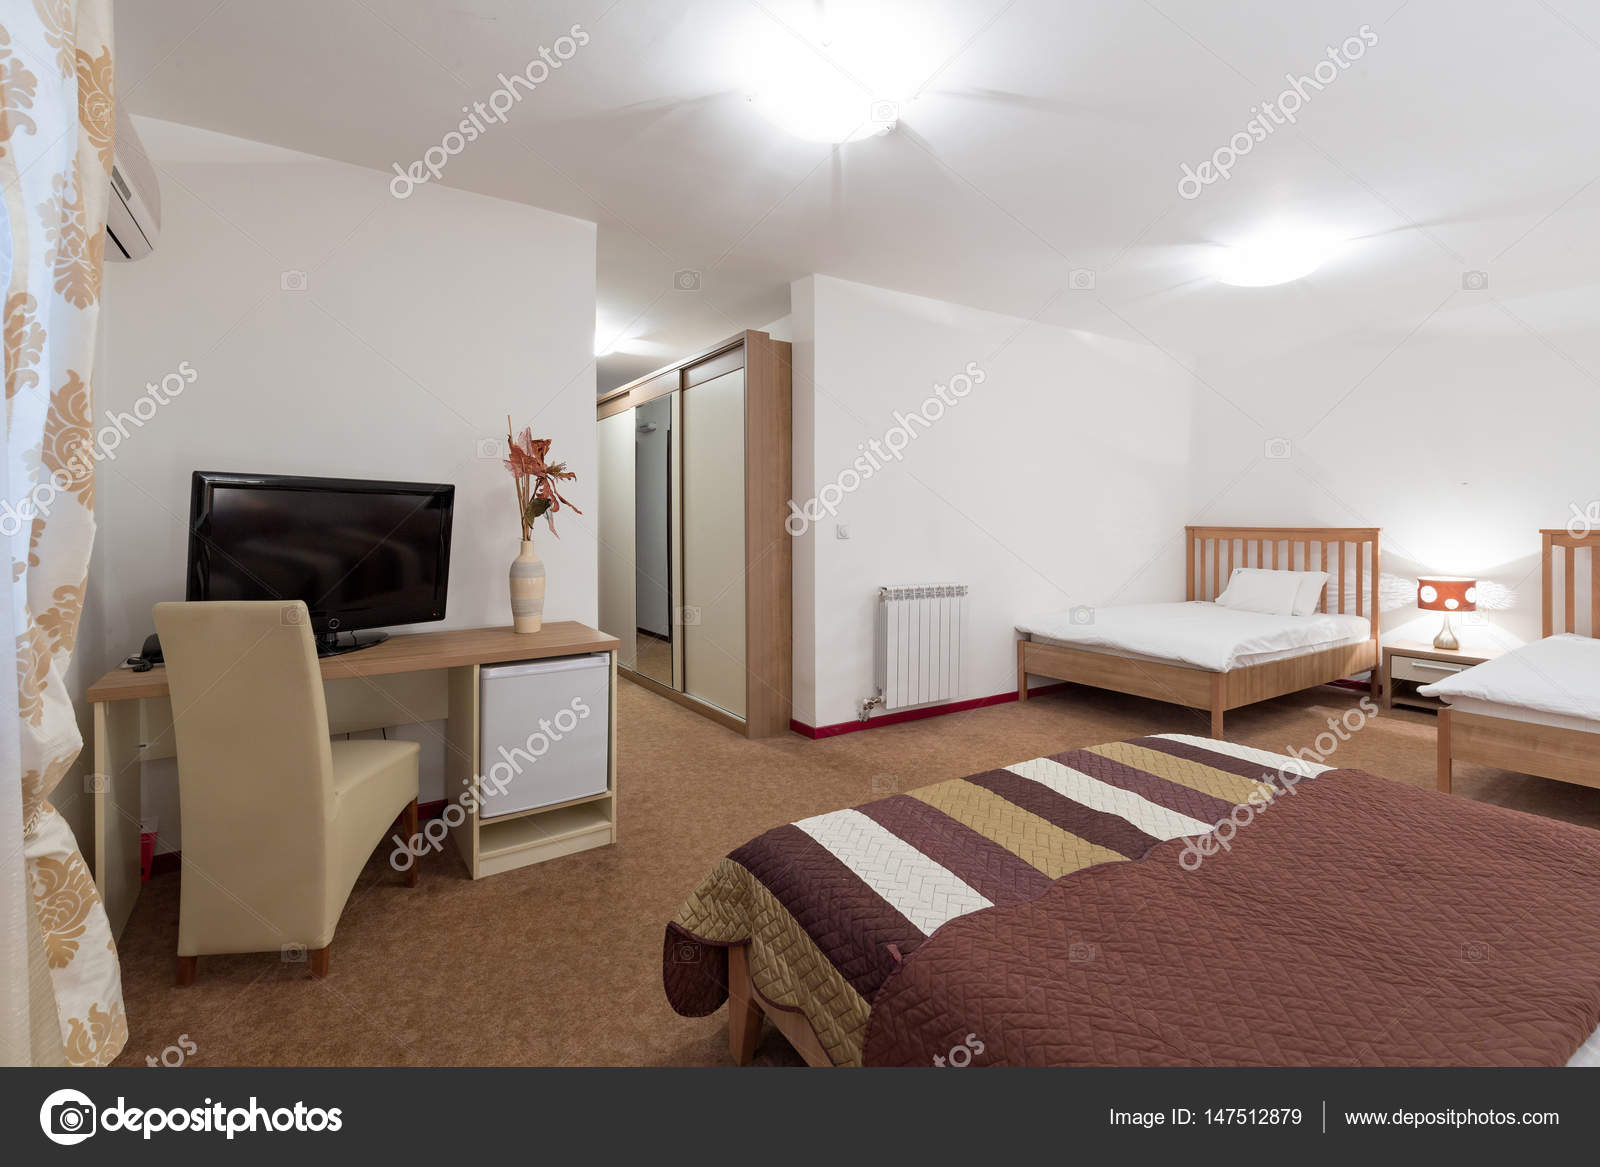 Interior Of A Motel Bedroom Stock Photo C Rilueda 147512879